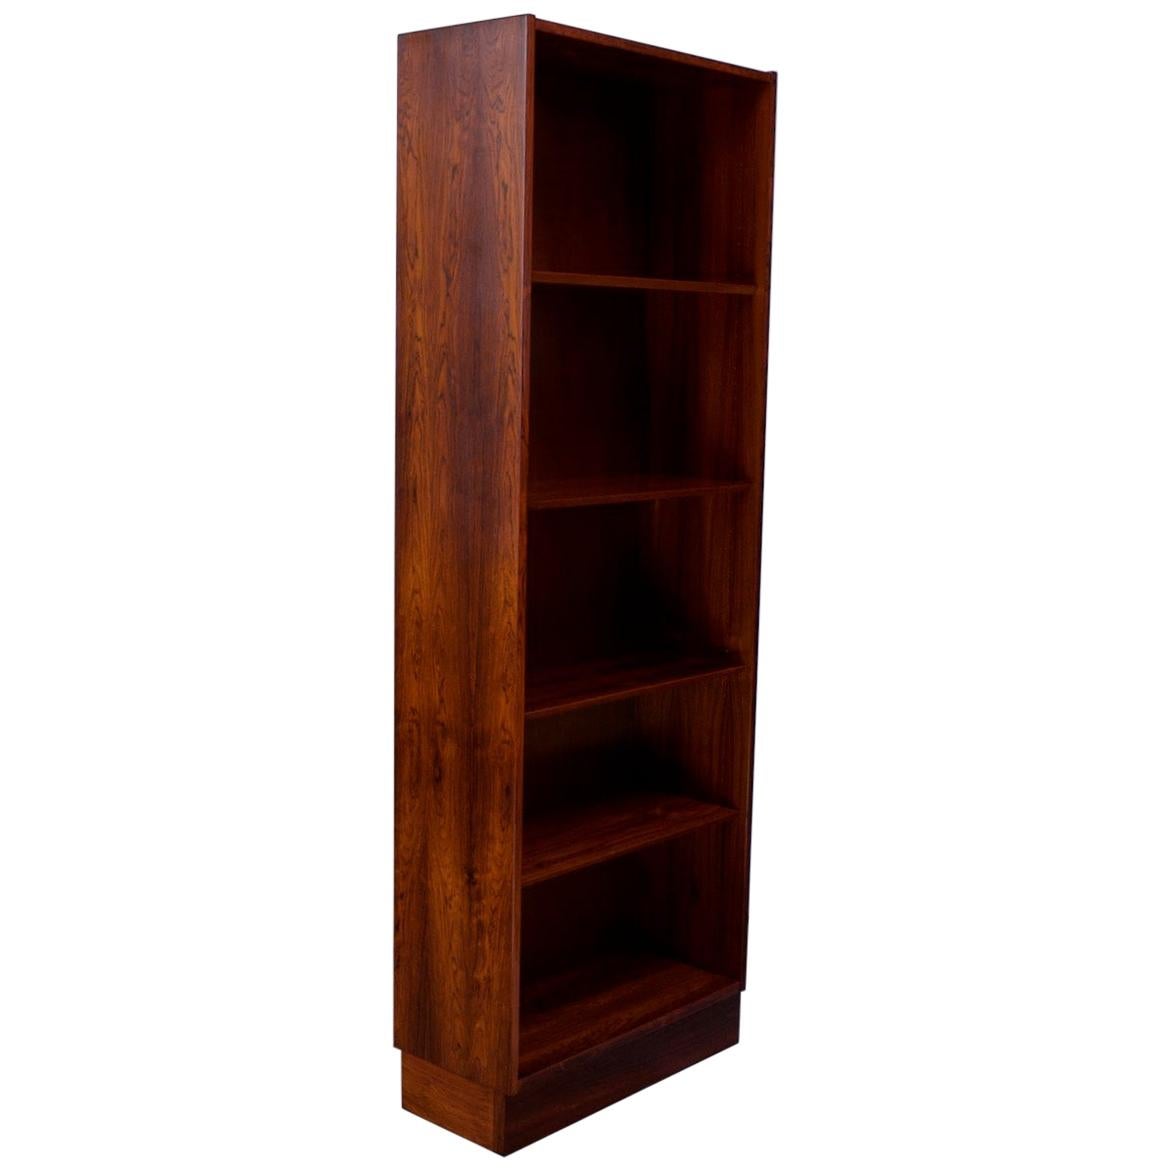 Danish Modern Rosewood Open Bookcase Designed by Carlo Jensen for Poul Hundevad